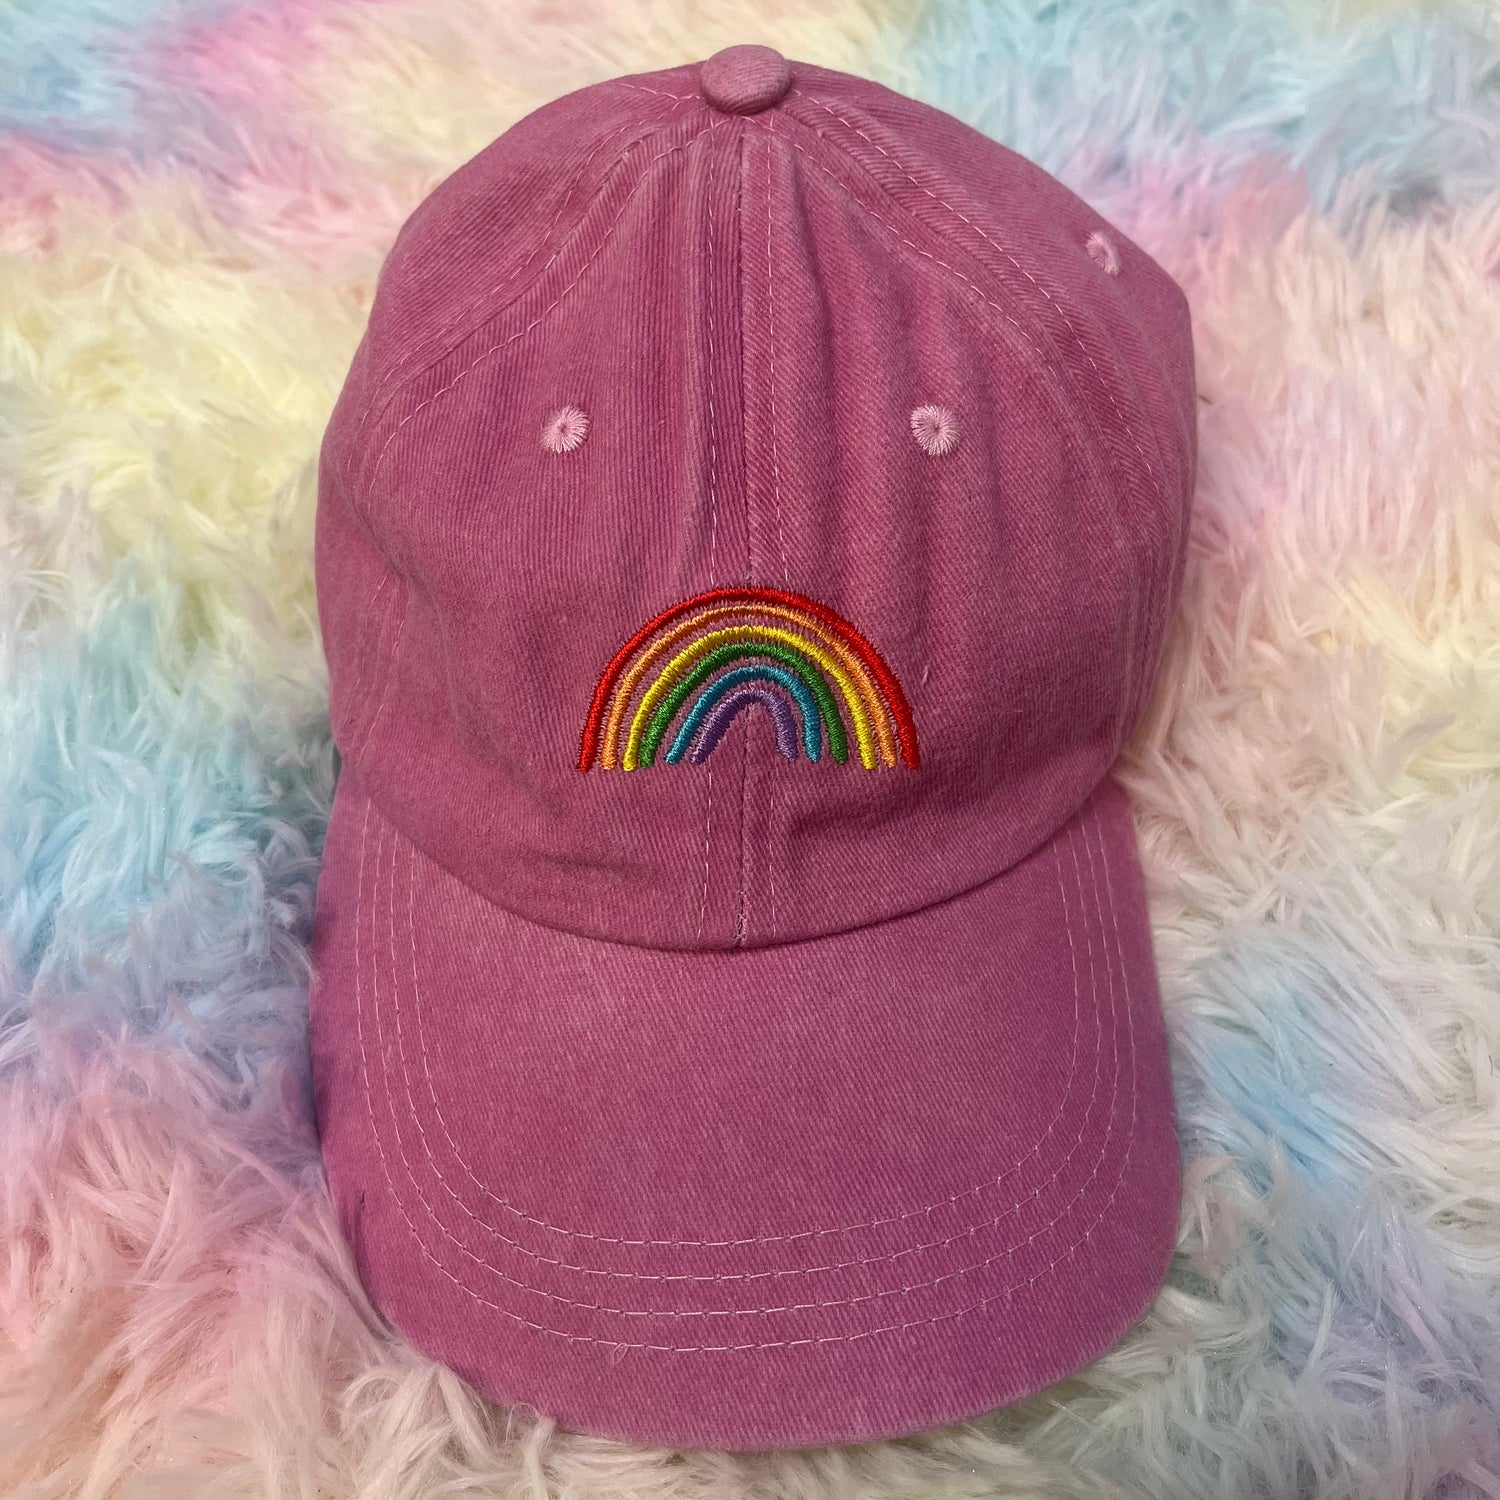 Rainbow Hat - Pink Distressed